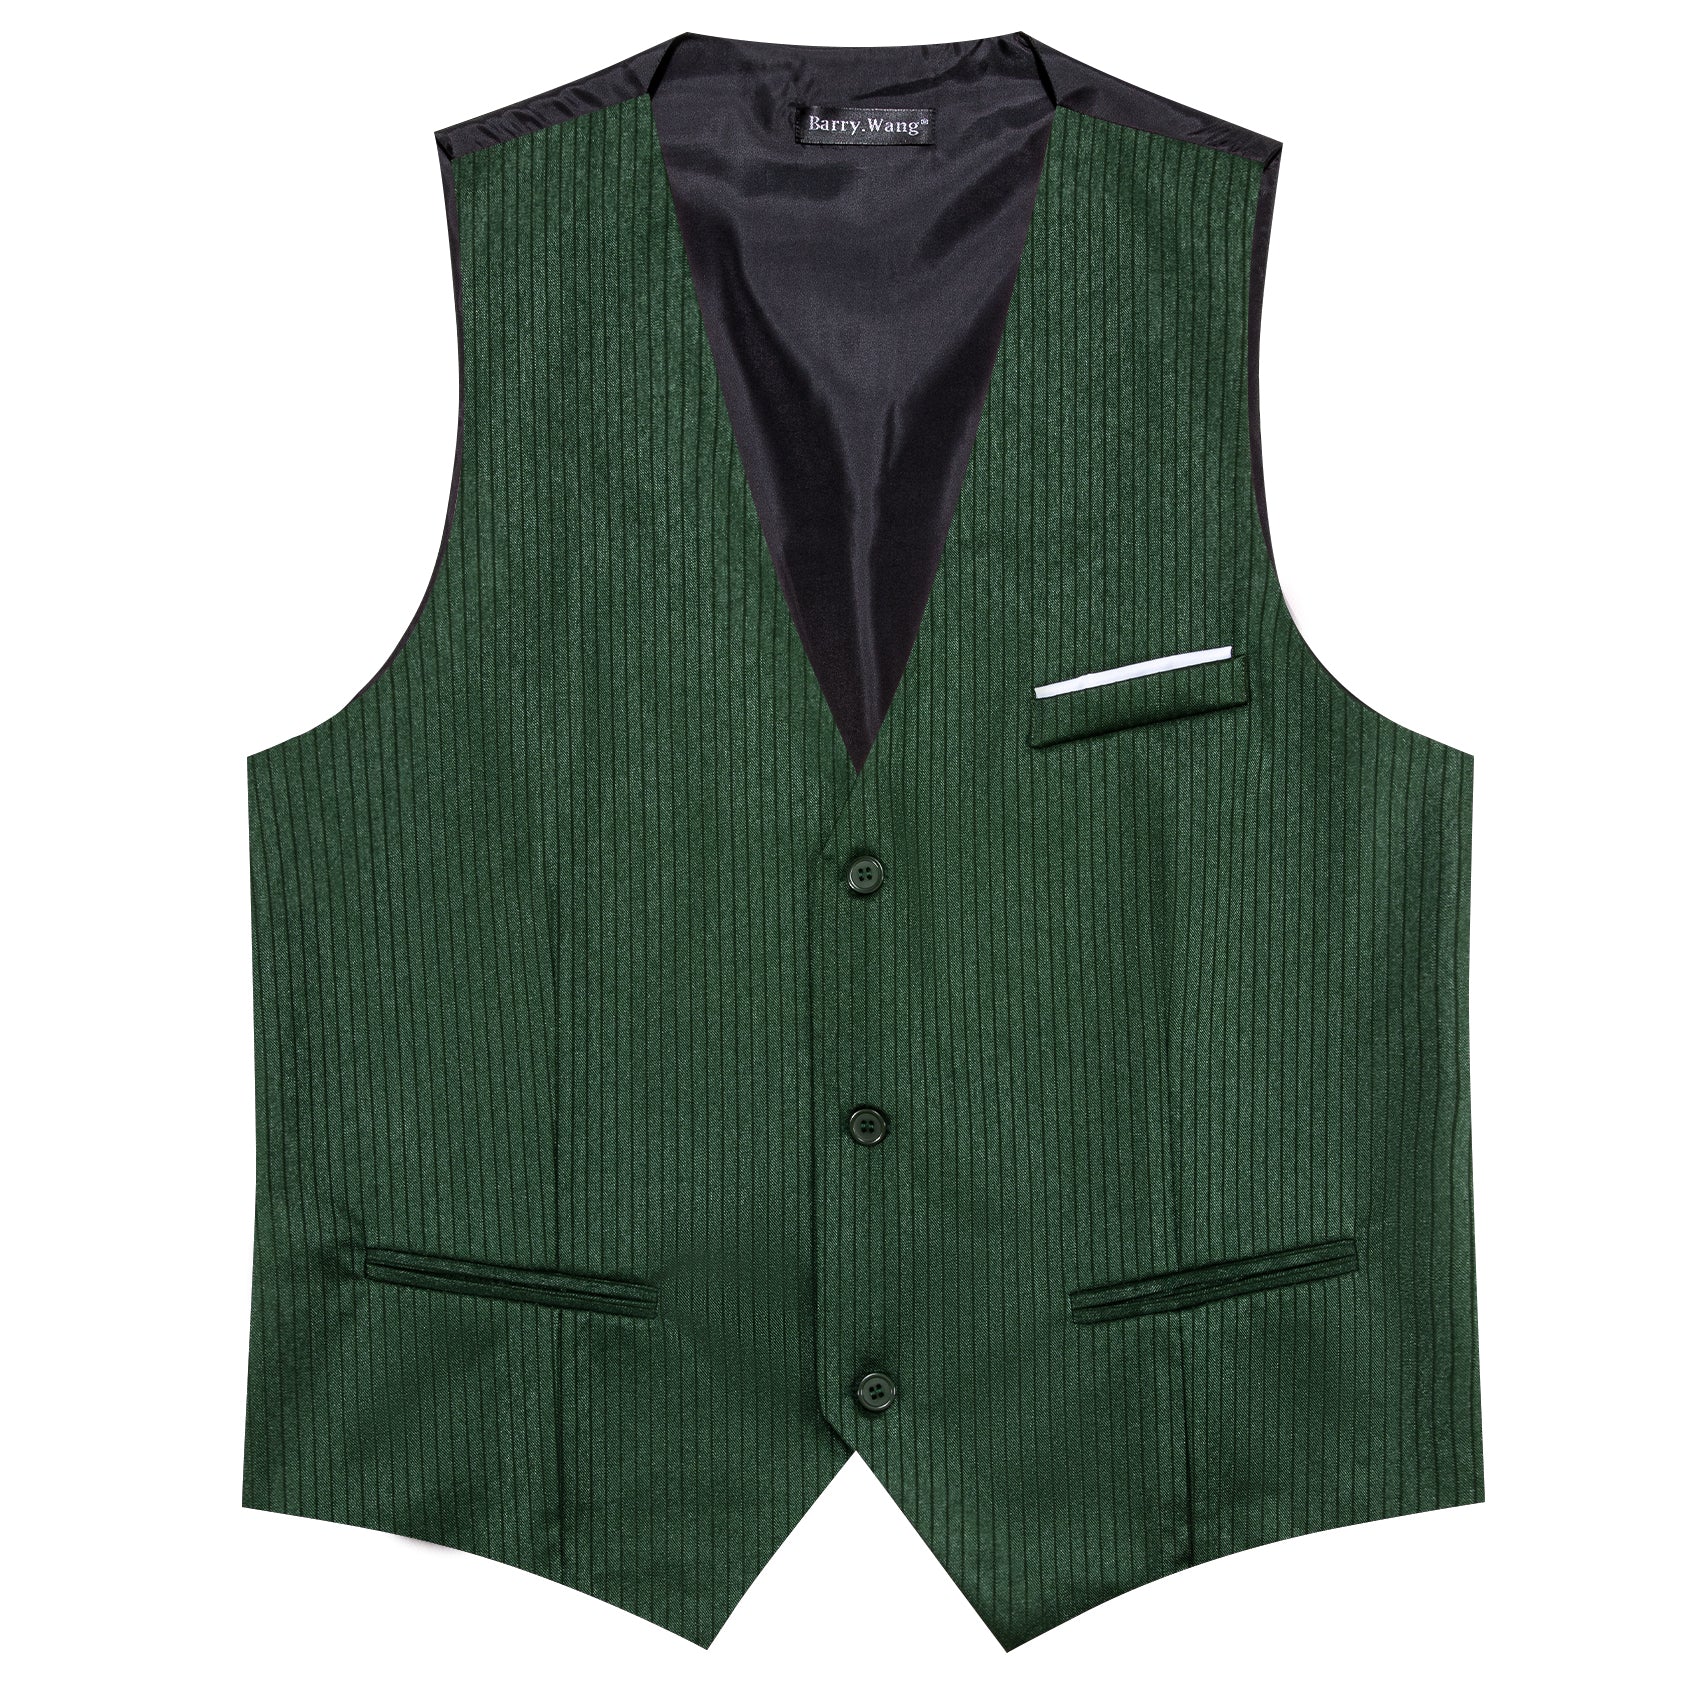 Barry.wang Men's Vest Formal Dark Green Solid Business Vest Suit